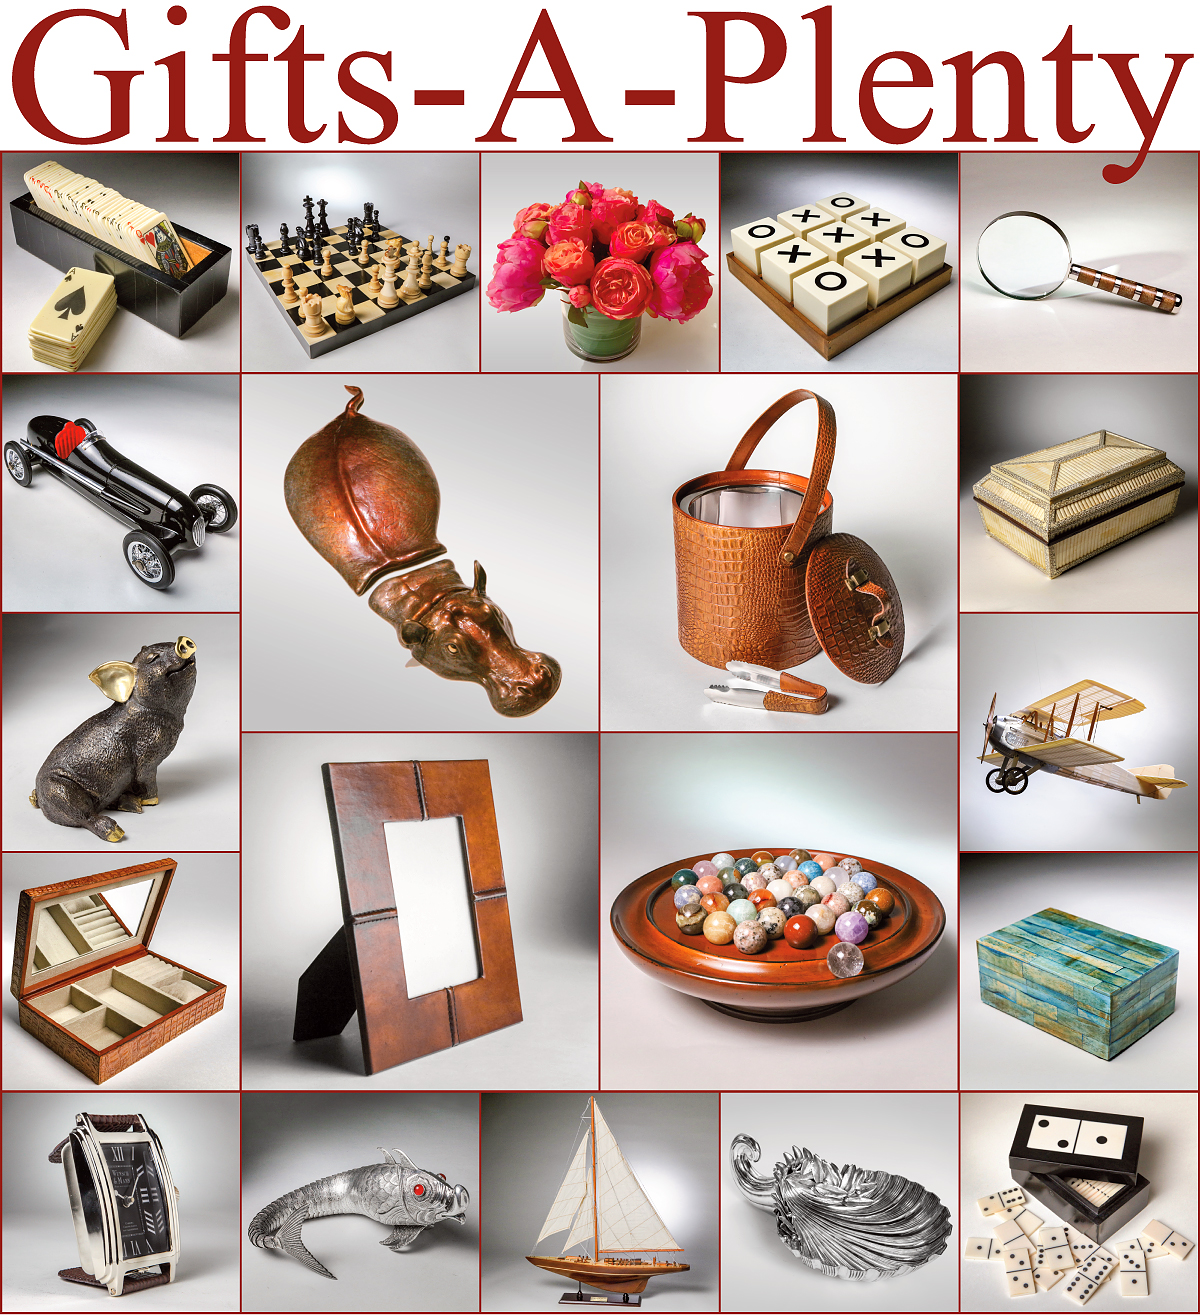 Gifts-A-Plenty at LindaHorn.com